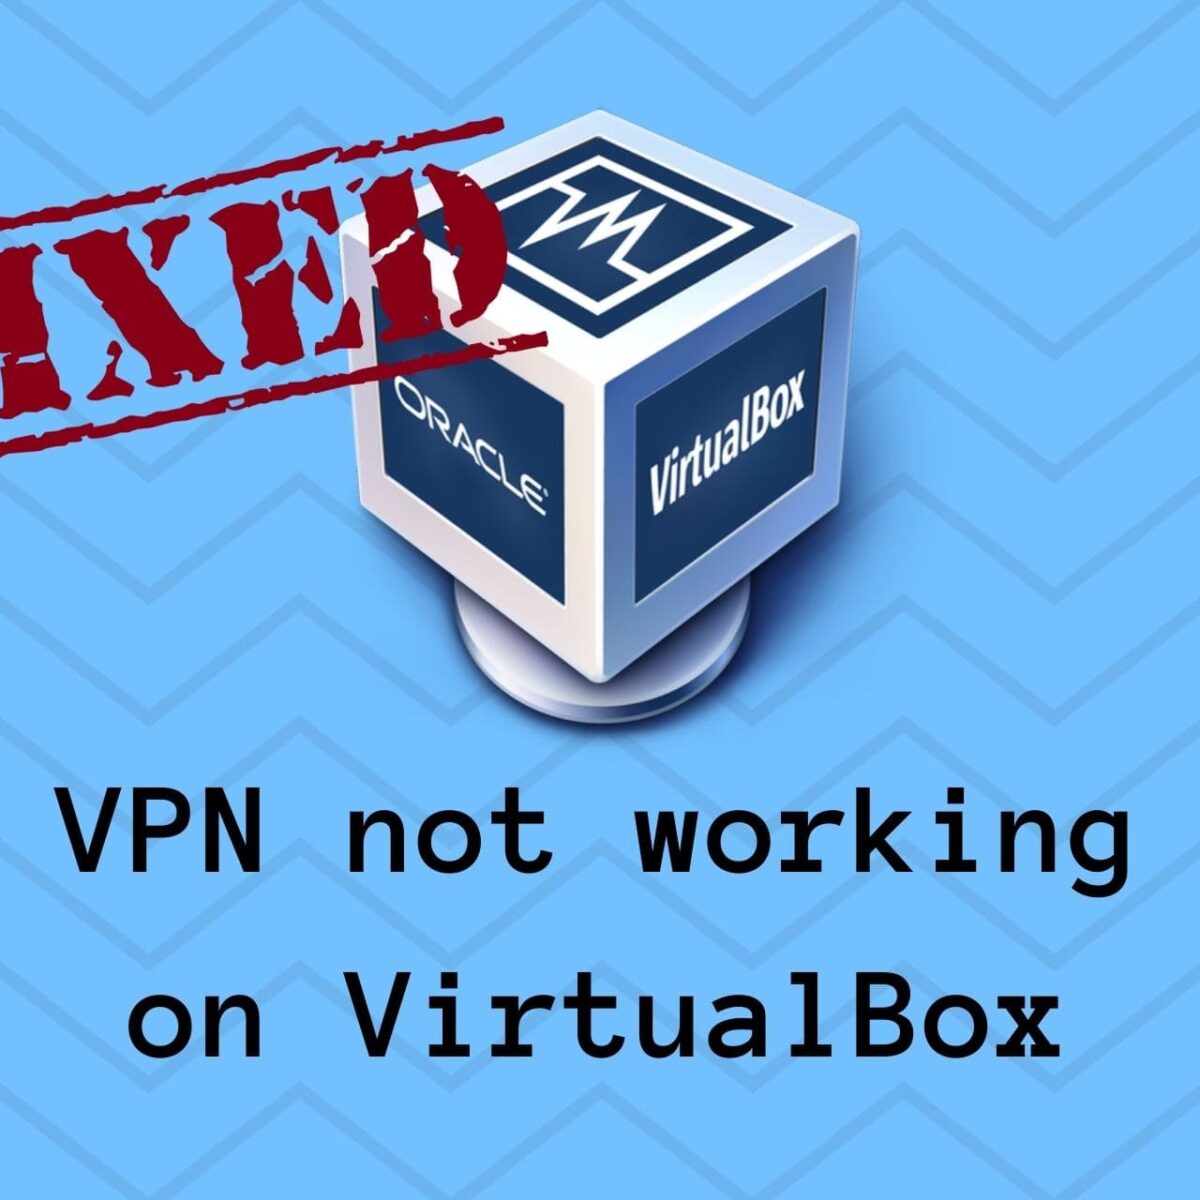 Er VirtualBox en VPN?